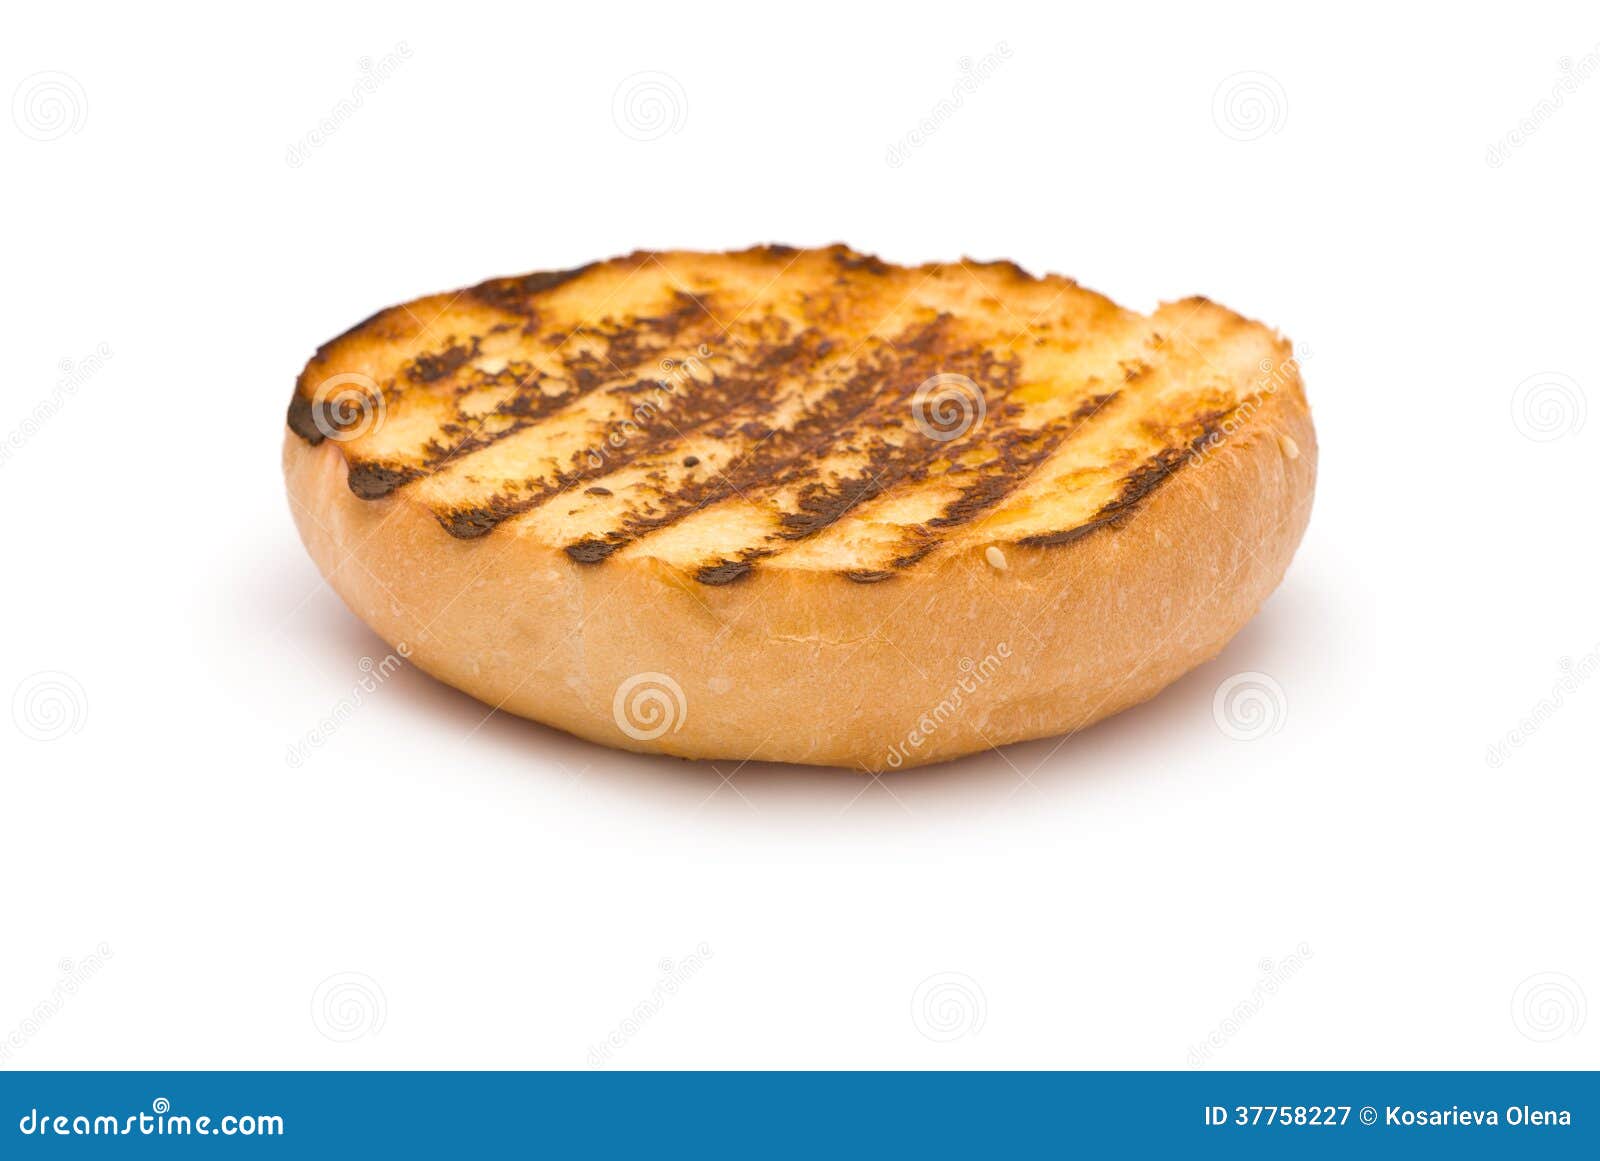 grilled-hamburger-bun-bottom-37758227.jpg